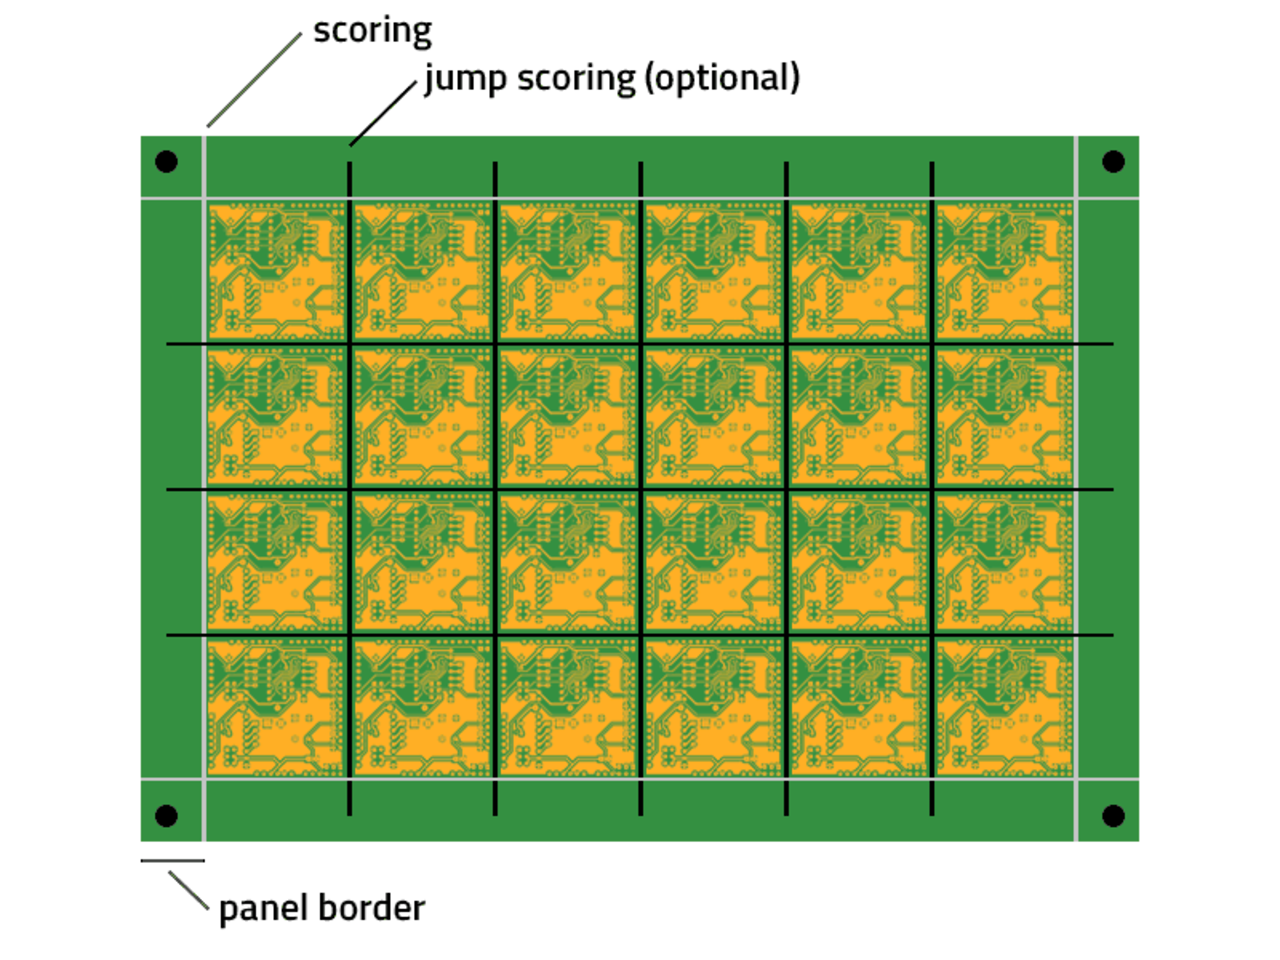 PCB jump scoring multiplier panel